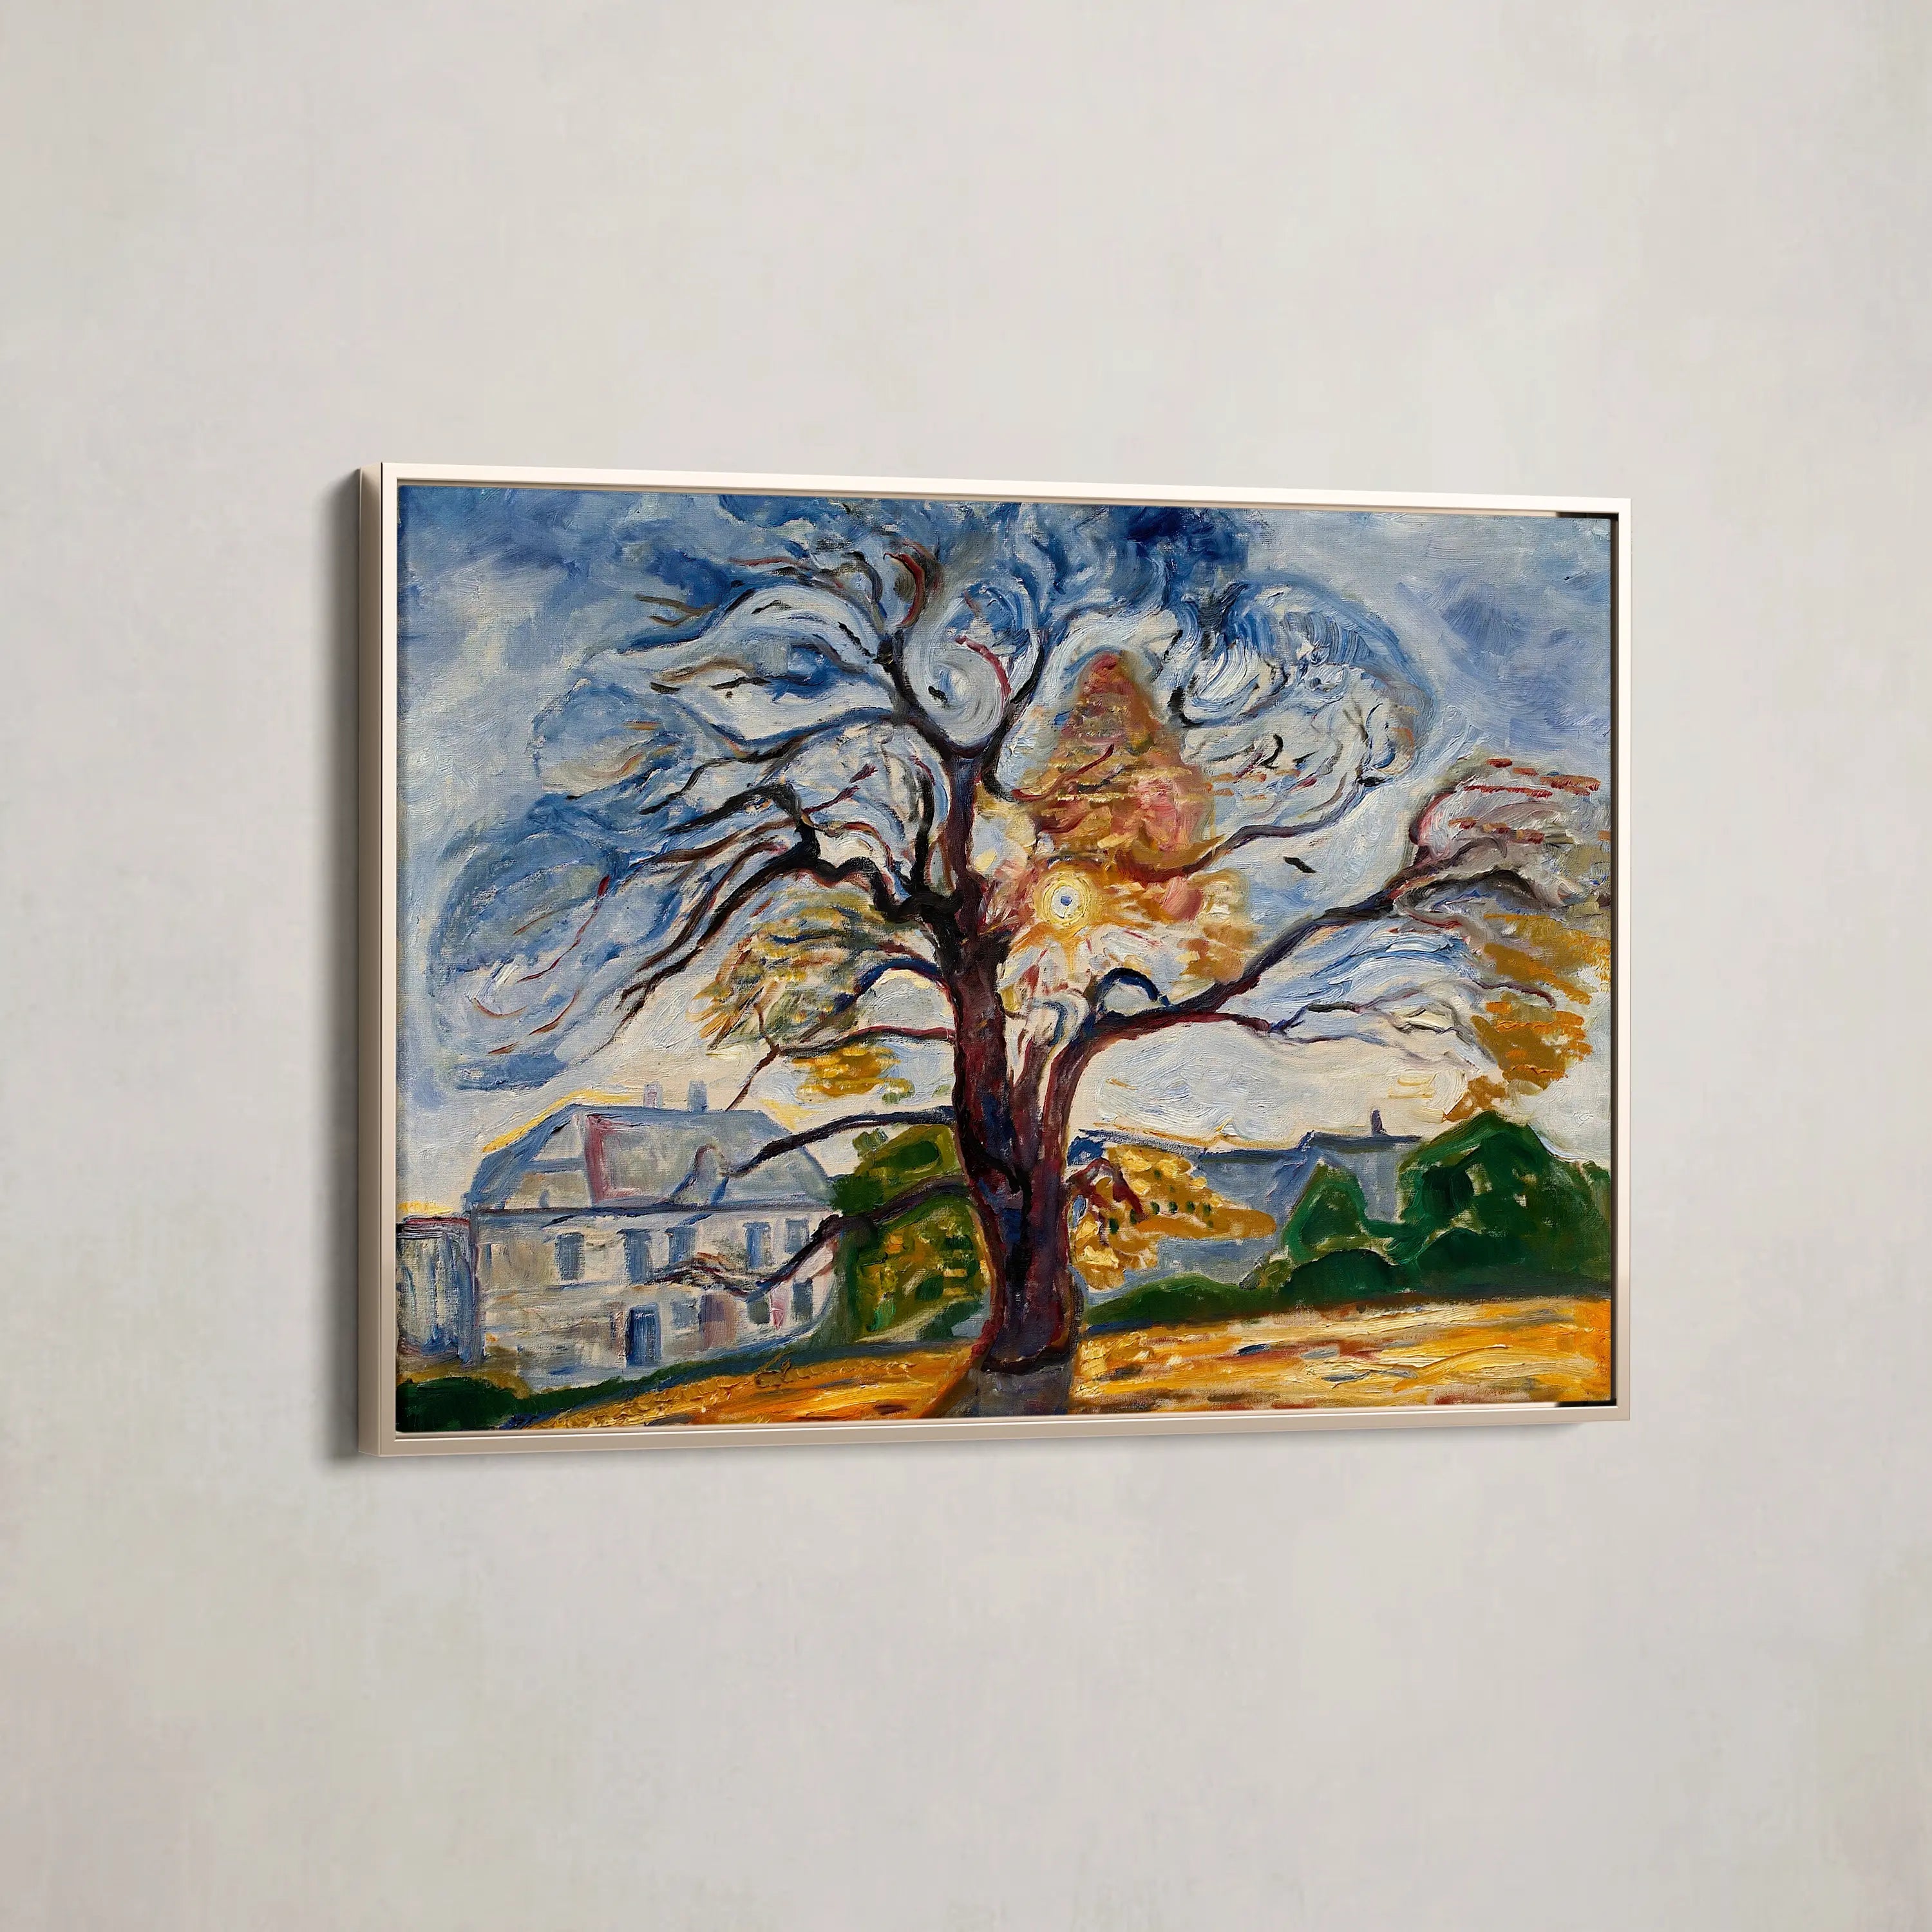 The Oak (1906) by Edvard Munch